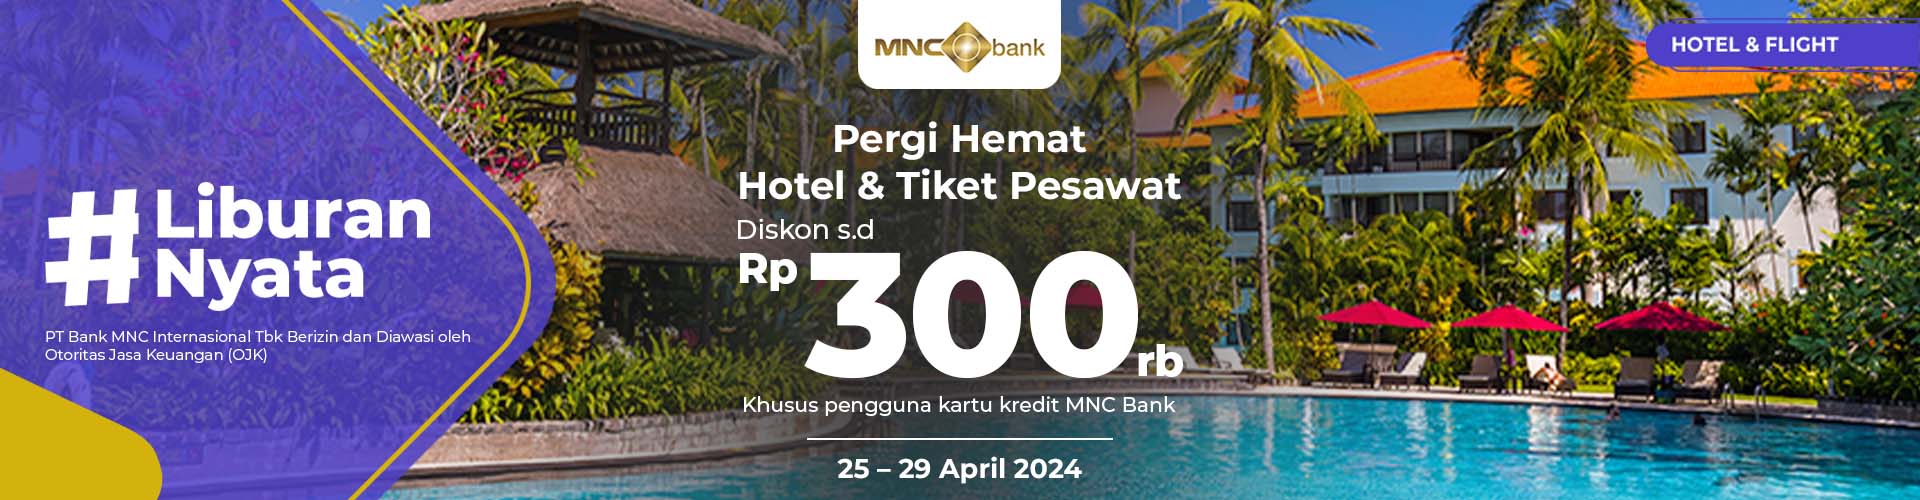 Pergi Hemat Hotel & Tiket Pesawat MNC